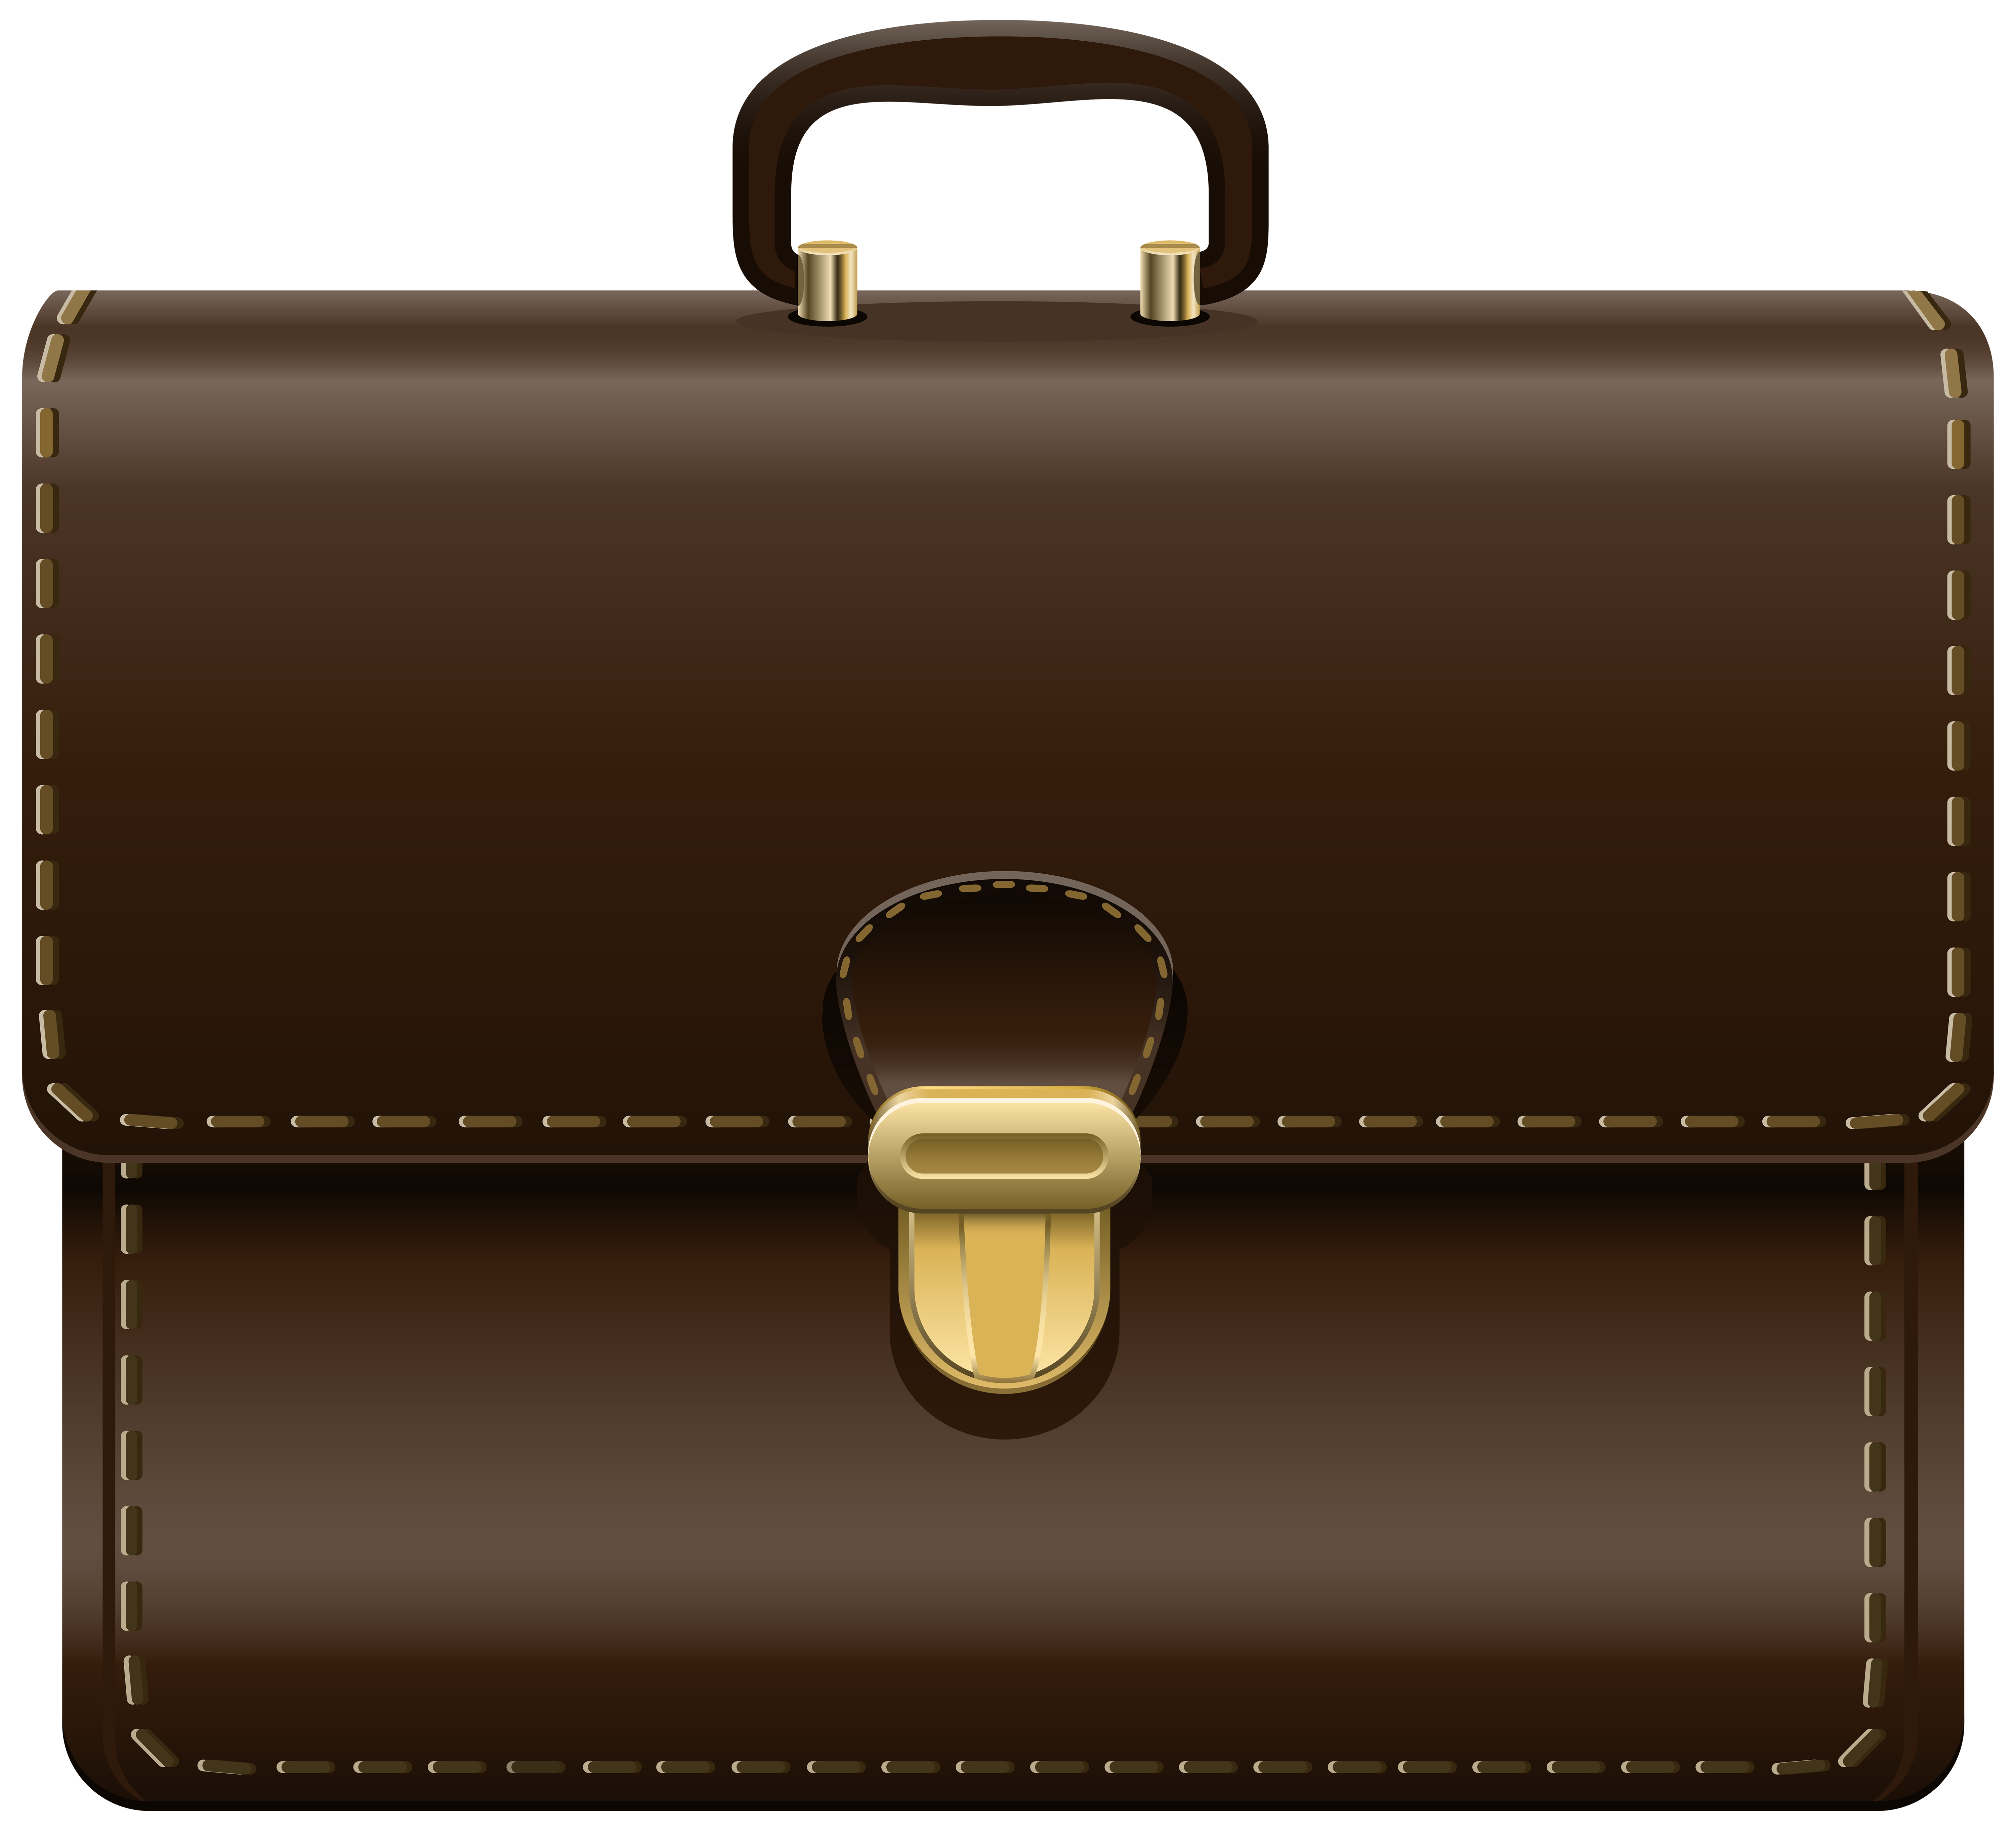 Briefcase clipart business bag, Briefcase business bag Transparent FREE